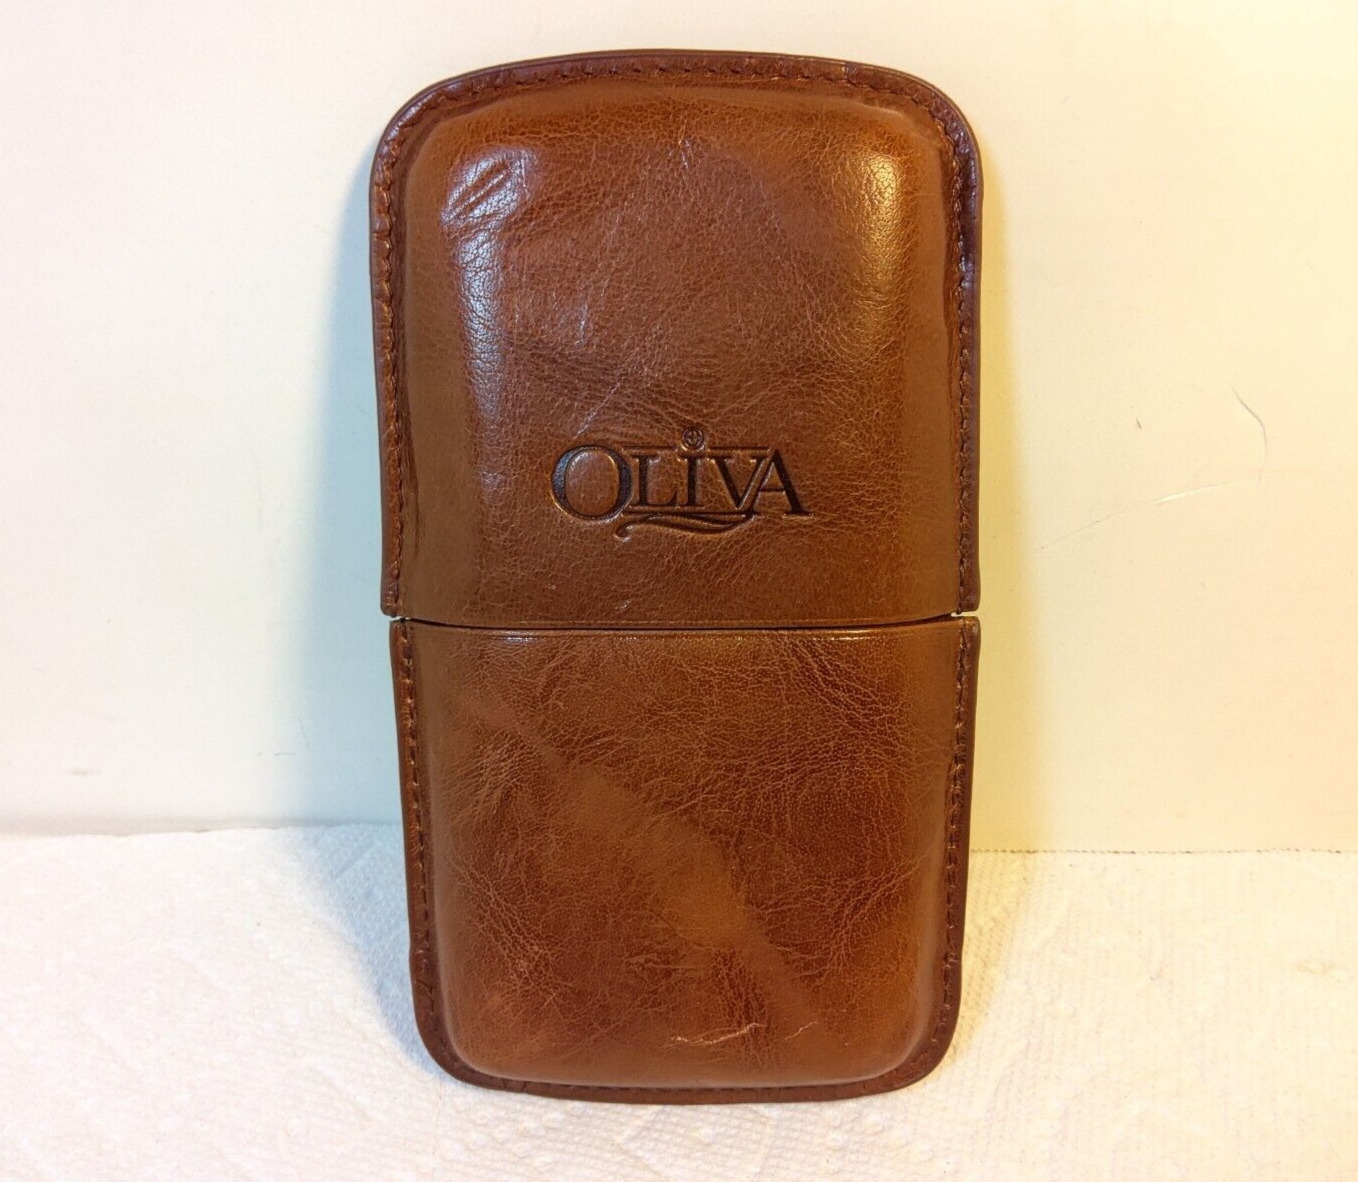 Oliva Leather Cigar Holder Case, Holds 3 Cigars